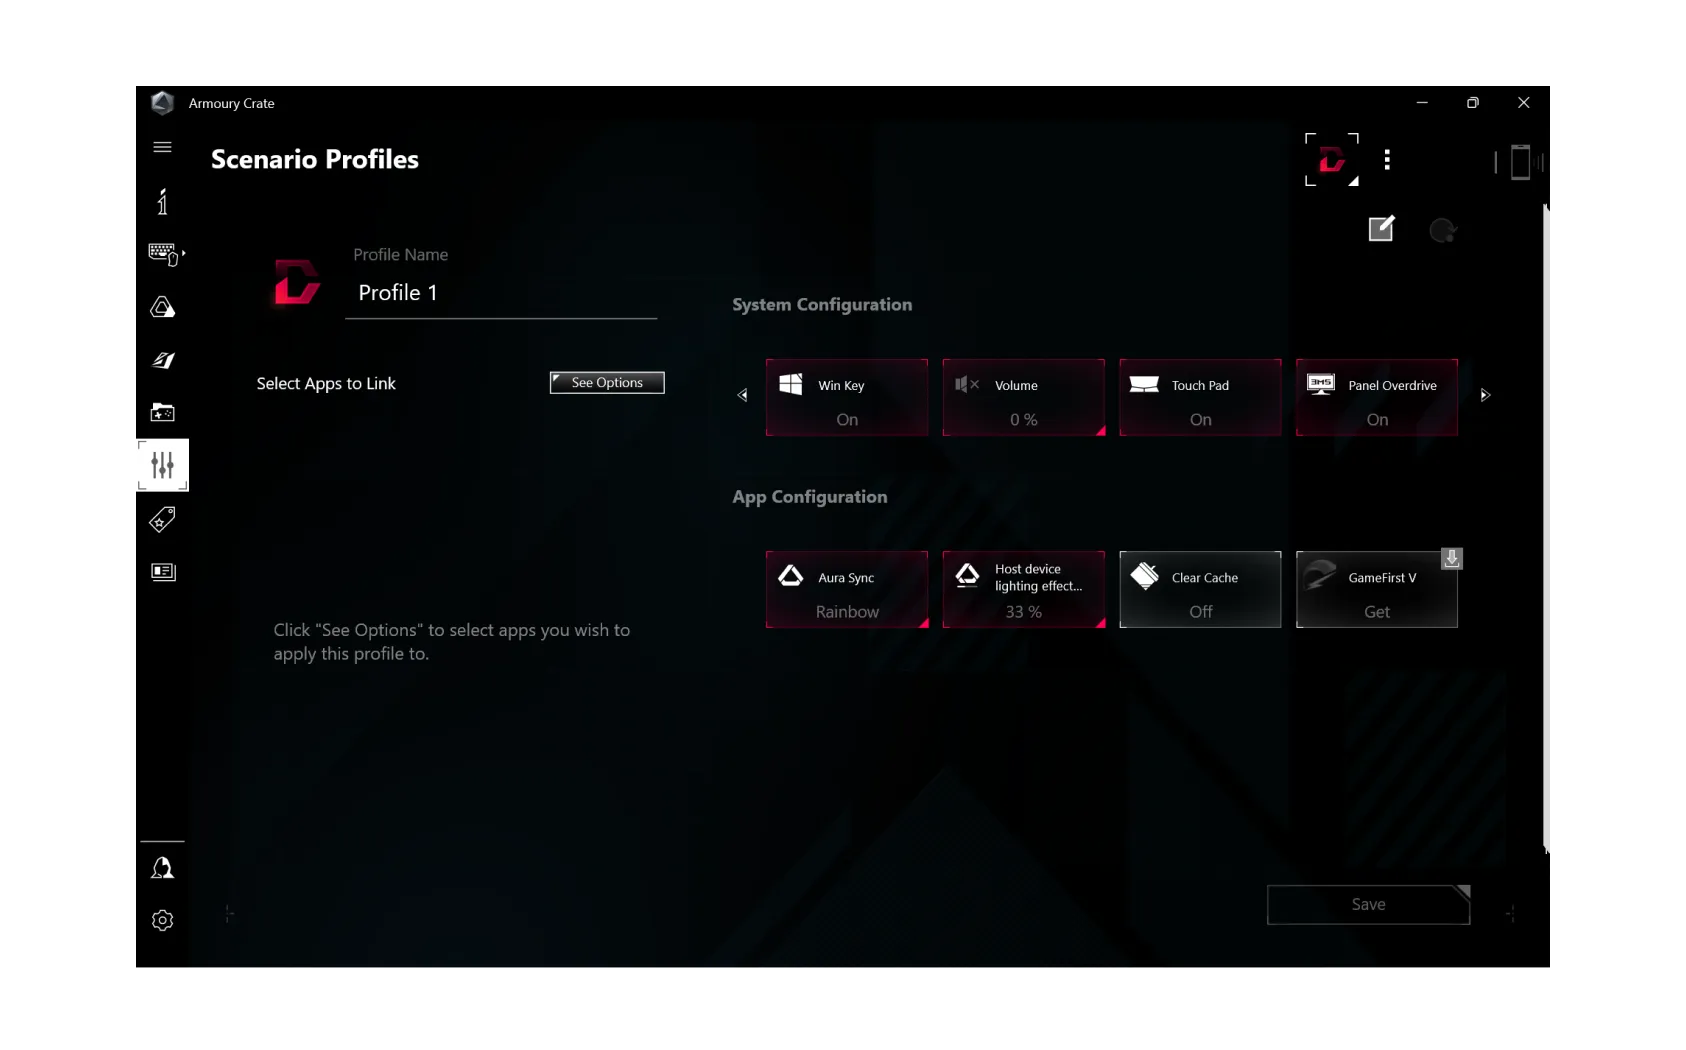 View of the Scenario Profiles settings menu in Armoury Crate.